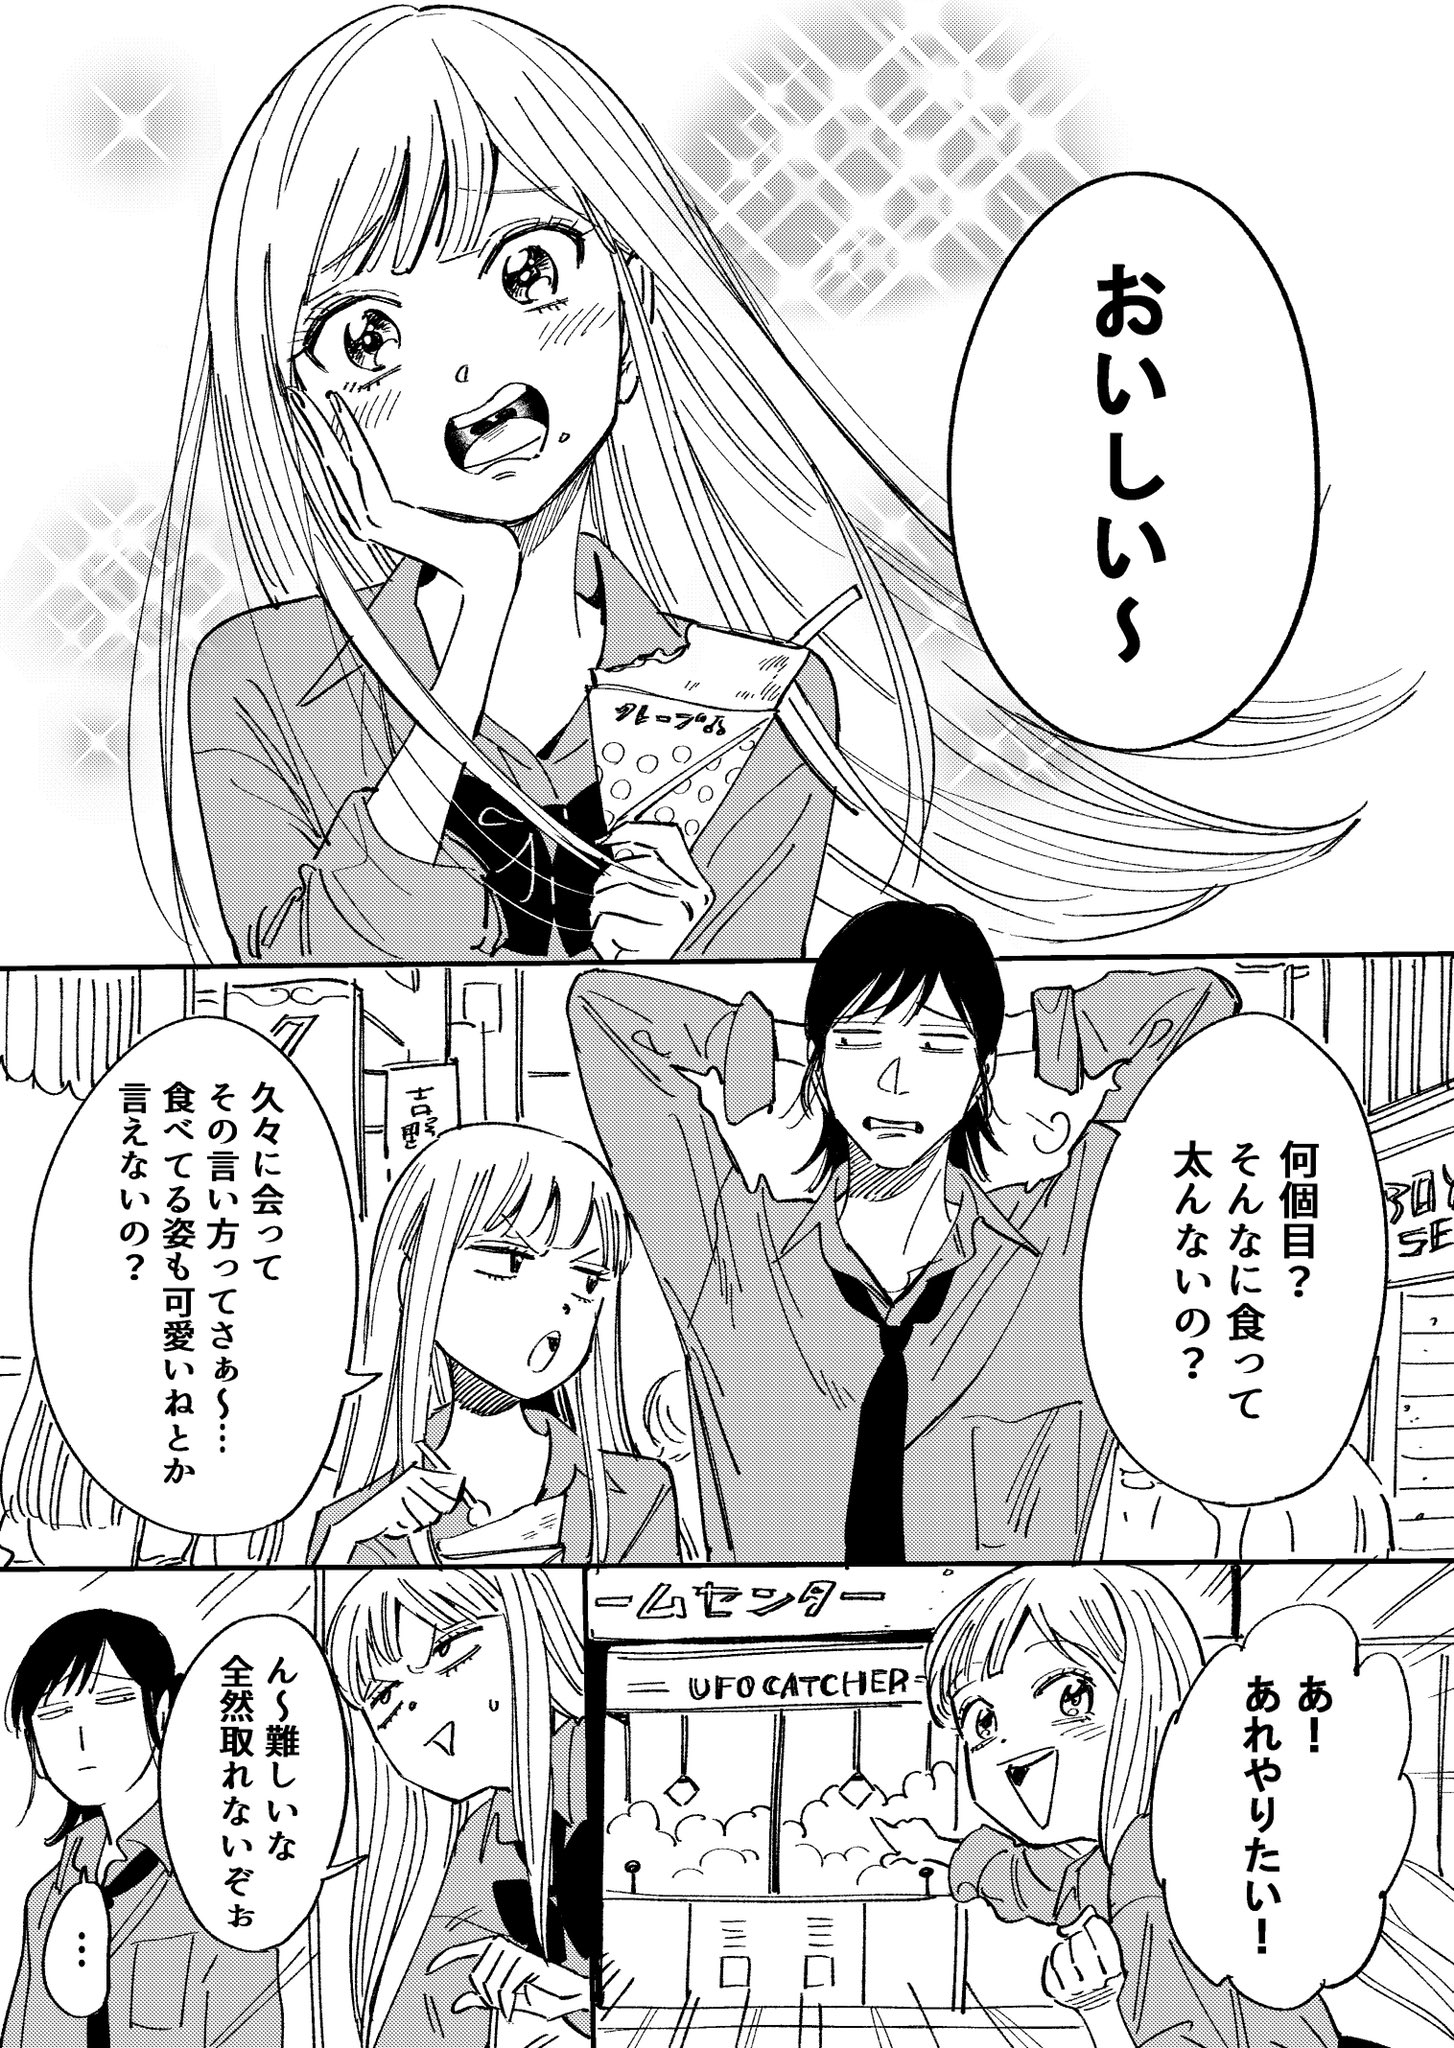 Long Distance Relationship manga